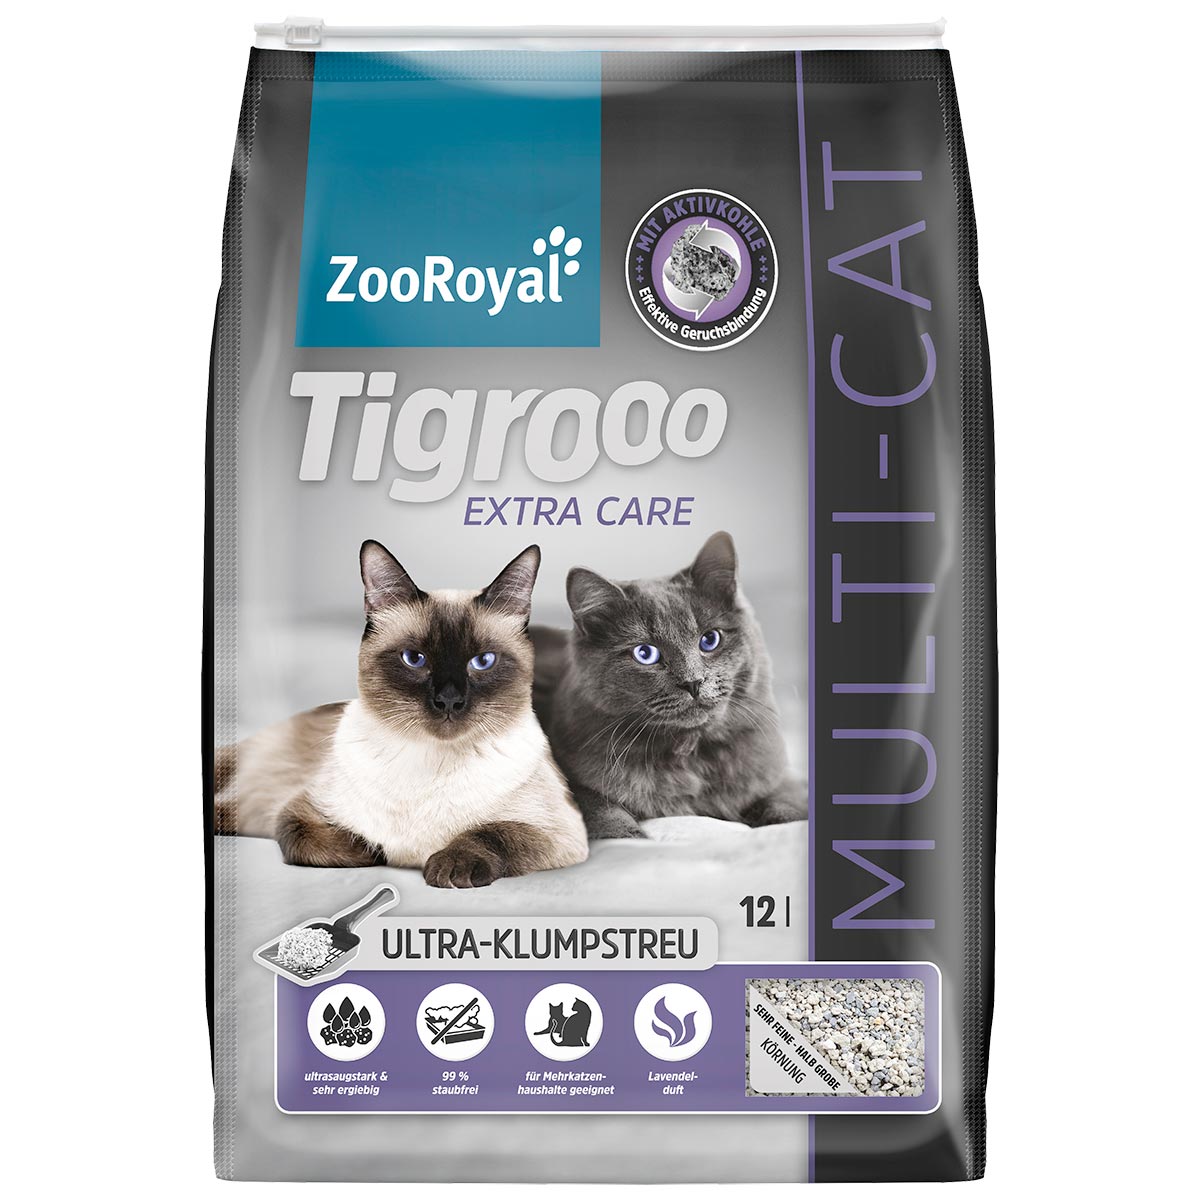 ZooRoyal Tigrooo Multi-Cat 2x12l von ZooRoyal Tigrooo